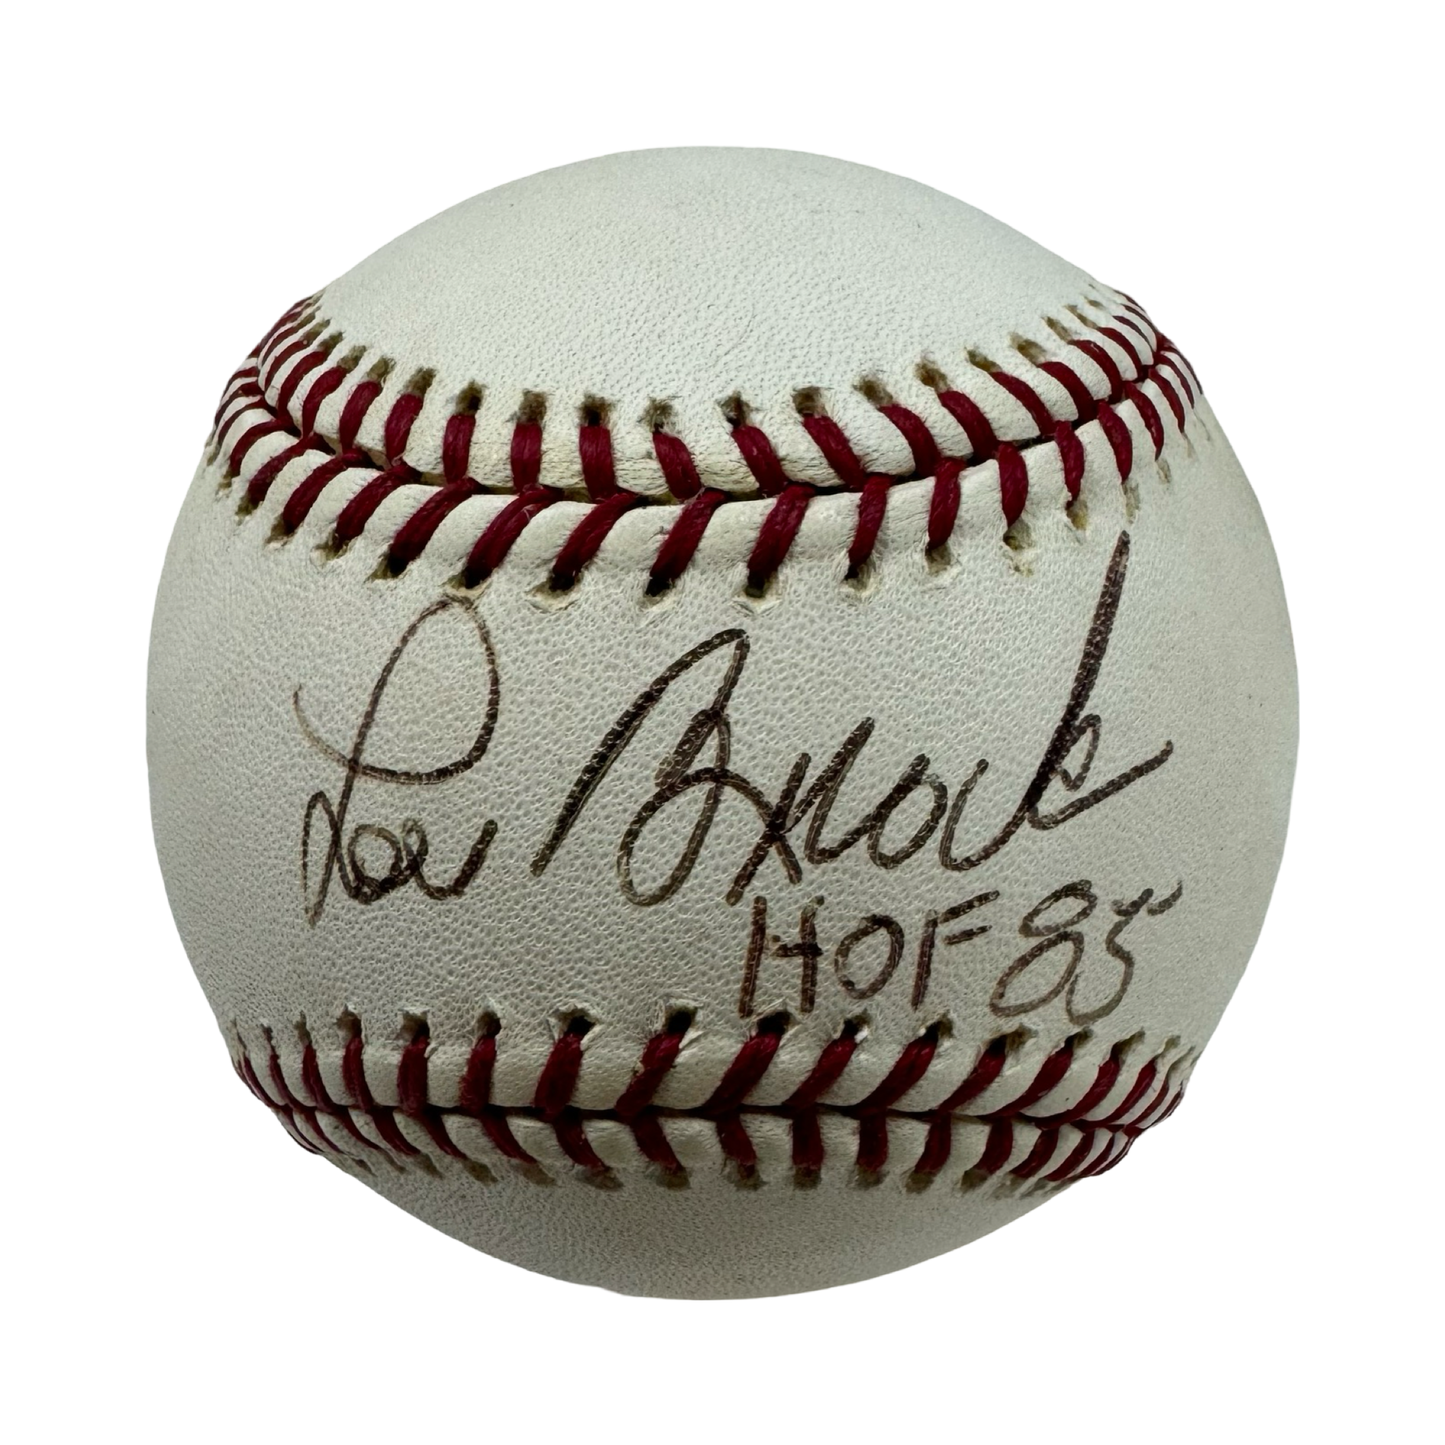 Lou Brock Autographed Official National League Baseball “HOF 85” Inscription JSA